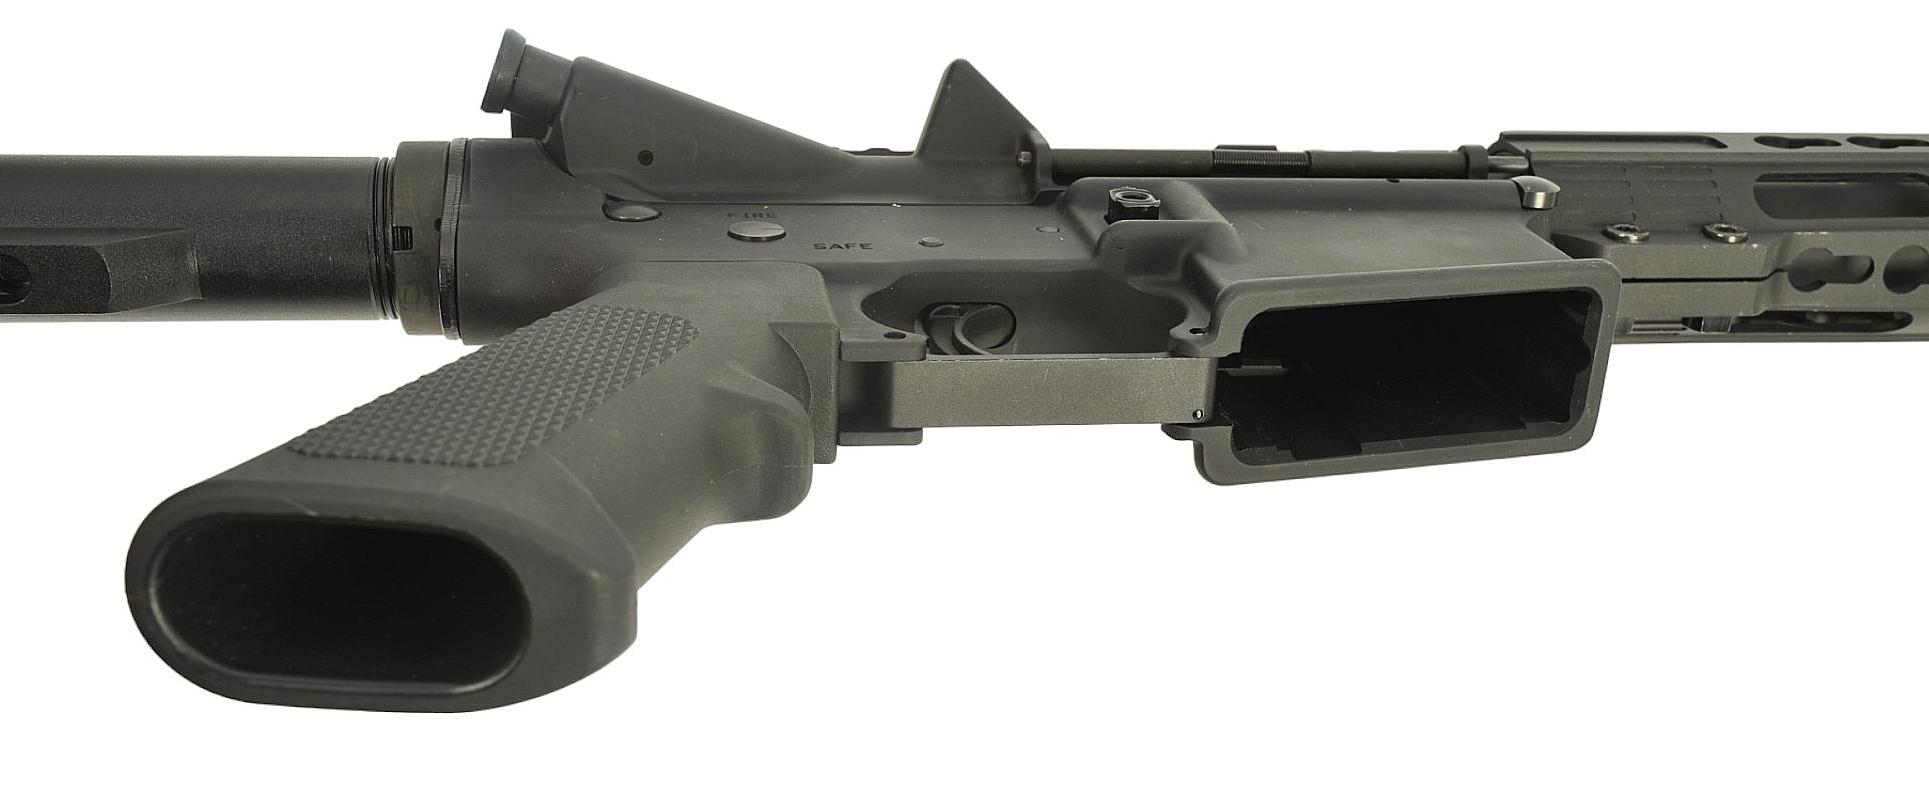 Bare Knuckle Defense BKD-15 Mod 1 5.56X45MM Rifle *Gunsmith Special* FFL Required: Mod1-00101 (J1)